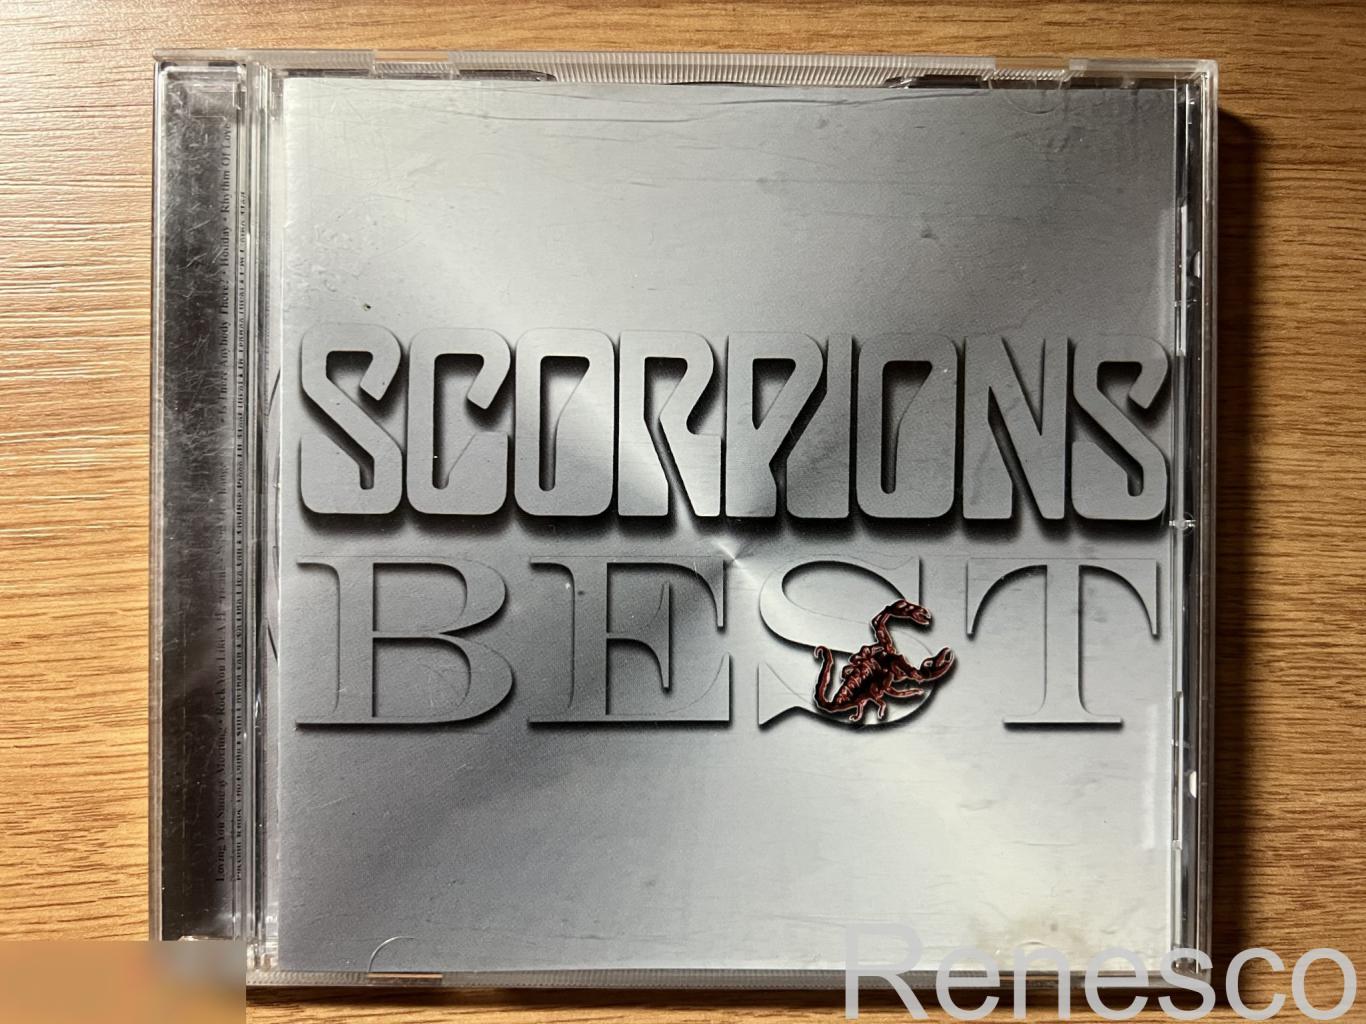 Scorpions – Best (Europe) (1999) (Remastered)